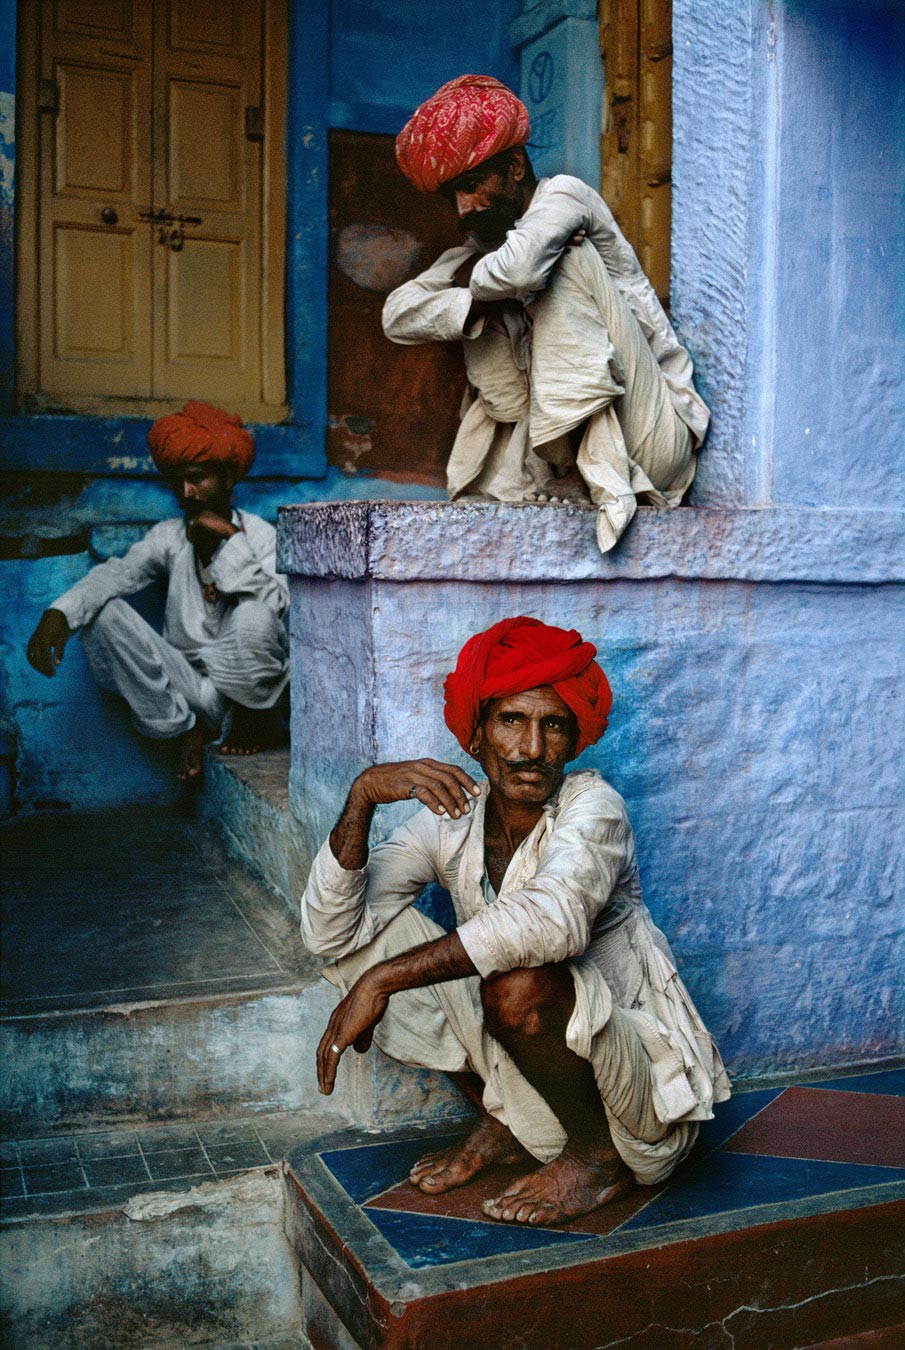 Steve-McCurry-India-Photography-7